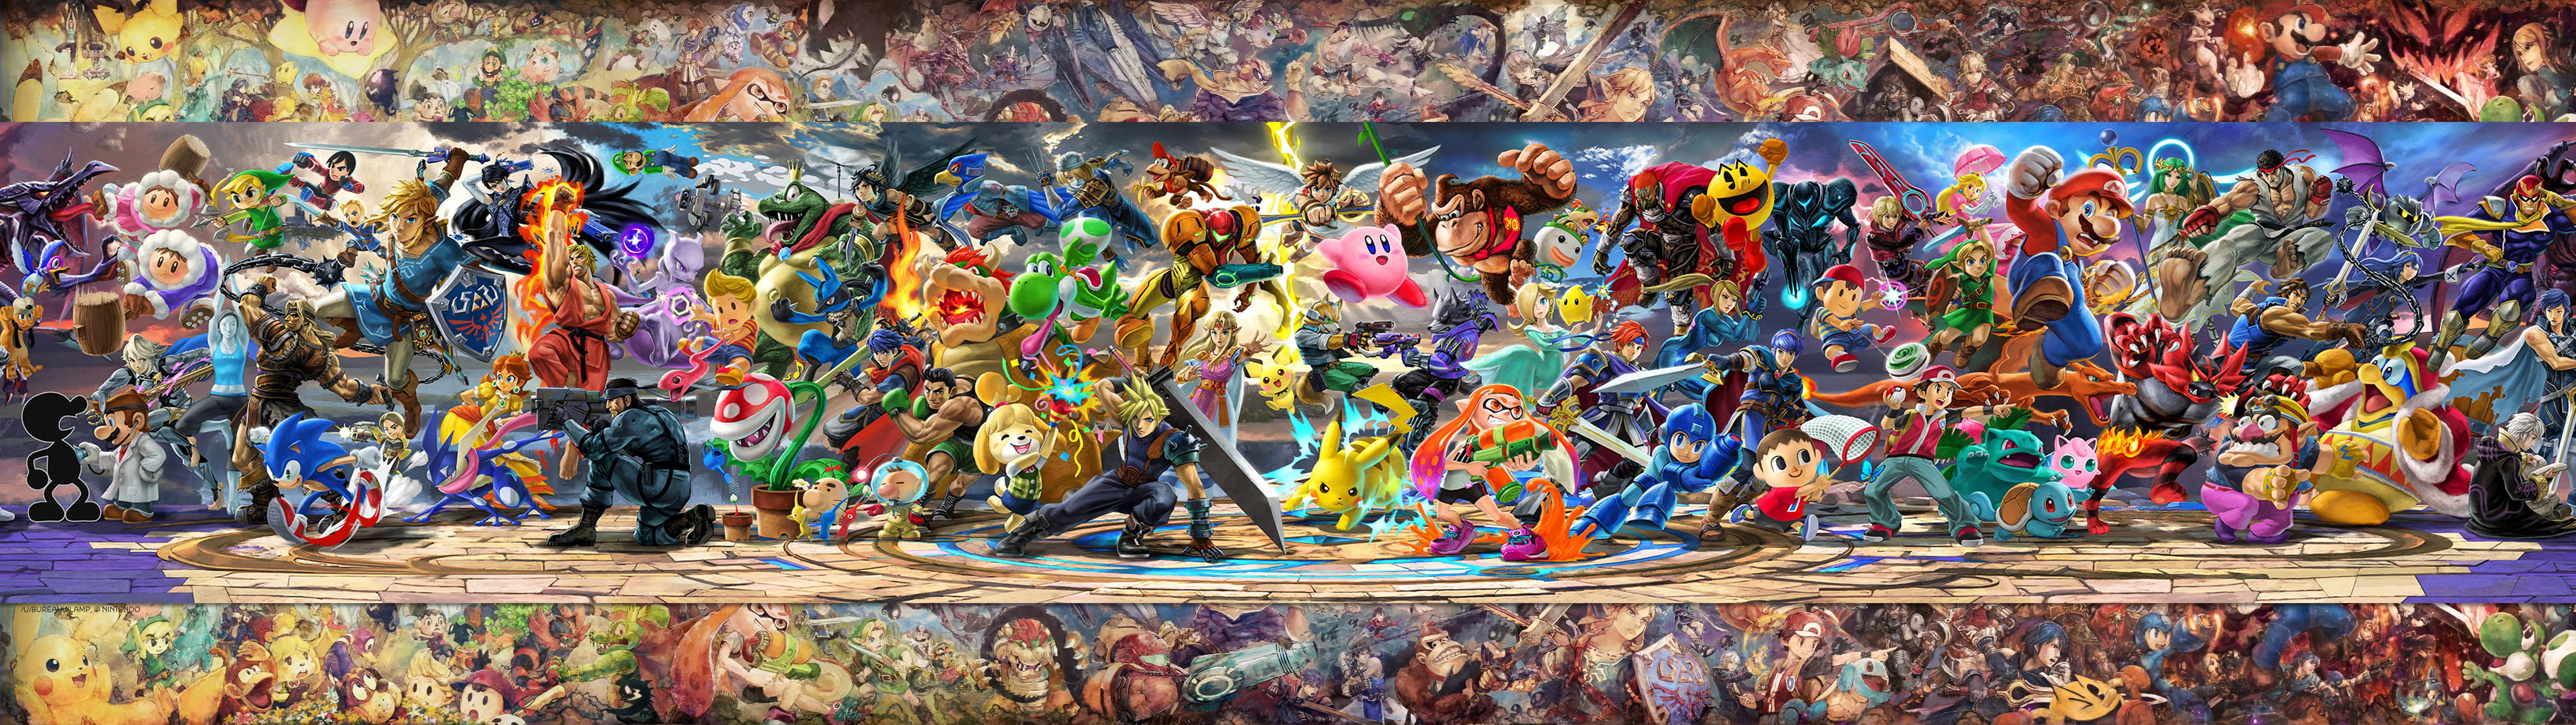 Super Smash Bros iphone wallpaper Wallpaper. iPhone